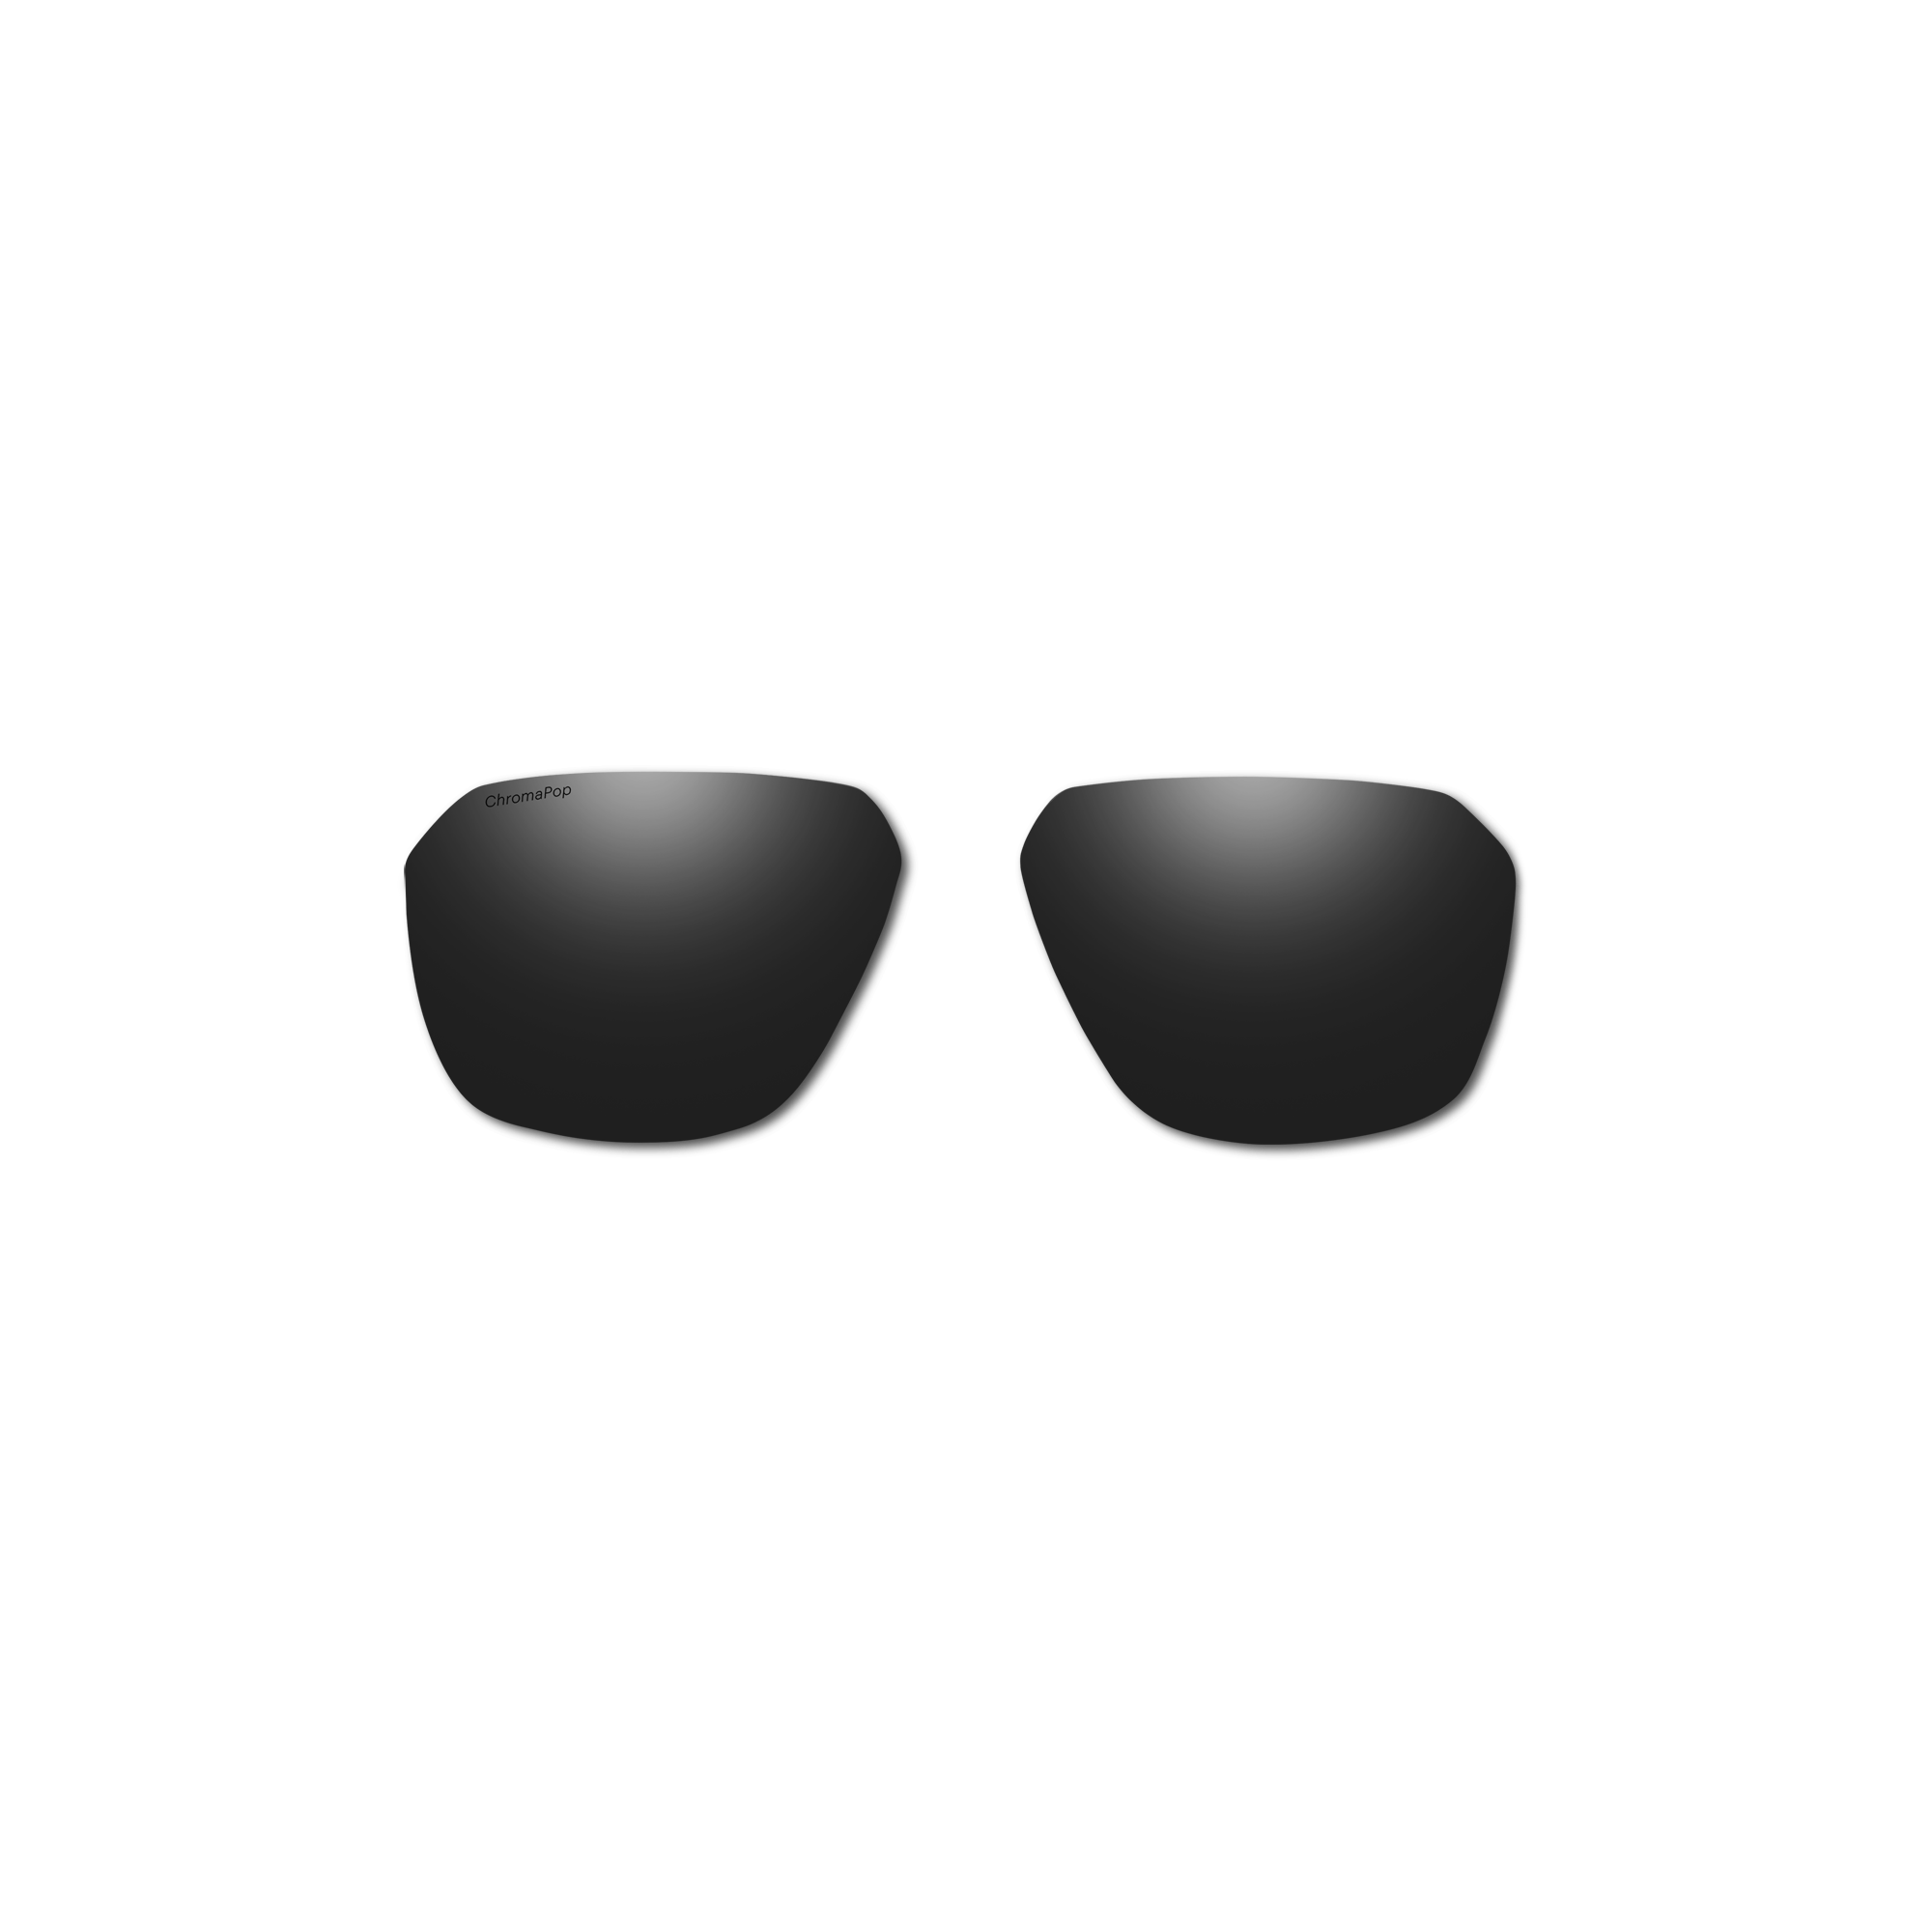 Leadout PivLock Sunglasses Replacement Lens | Smith Optics